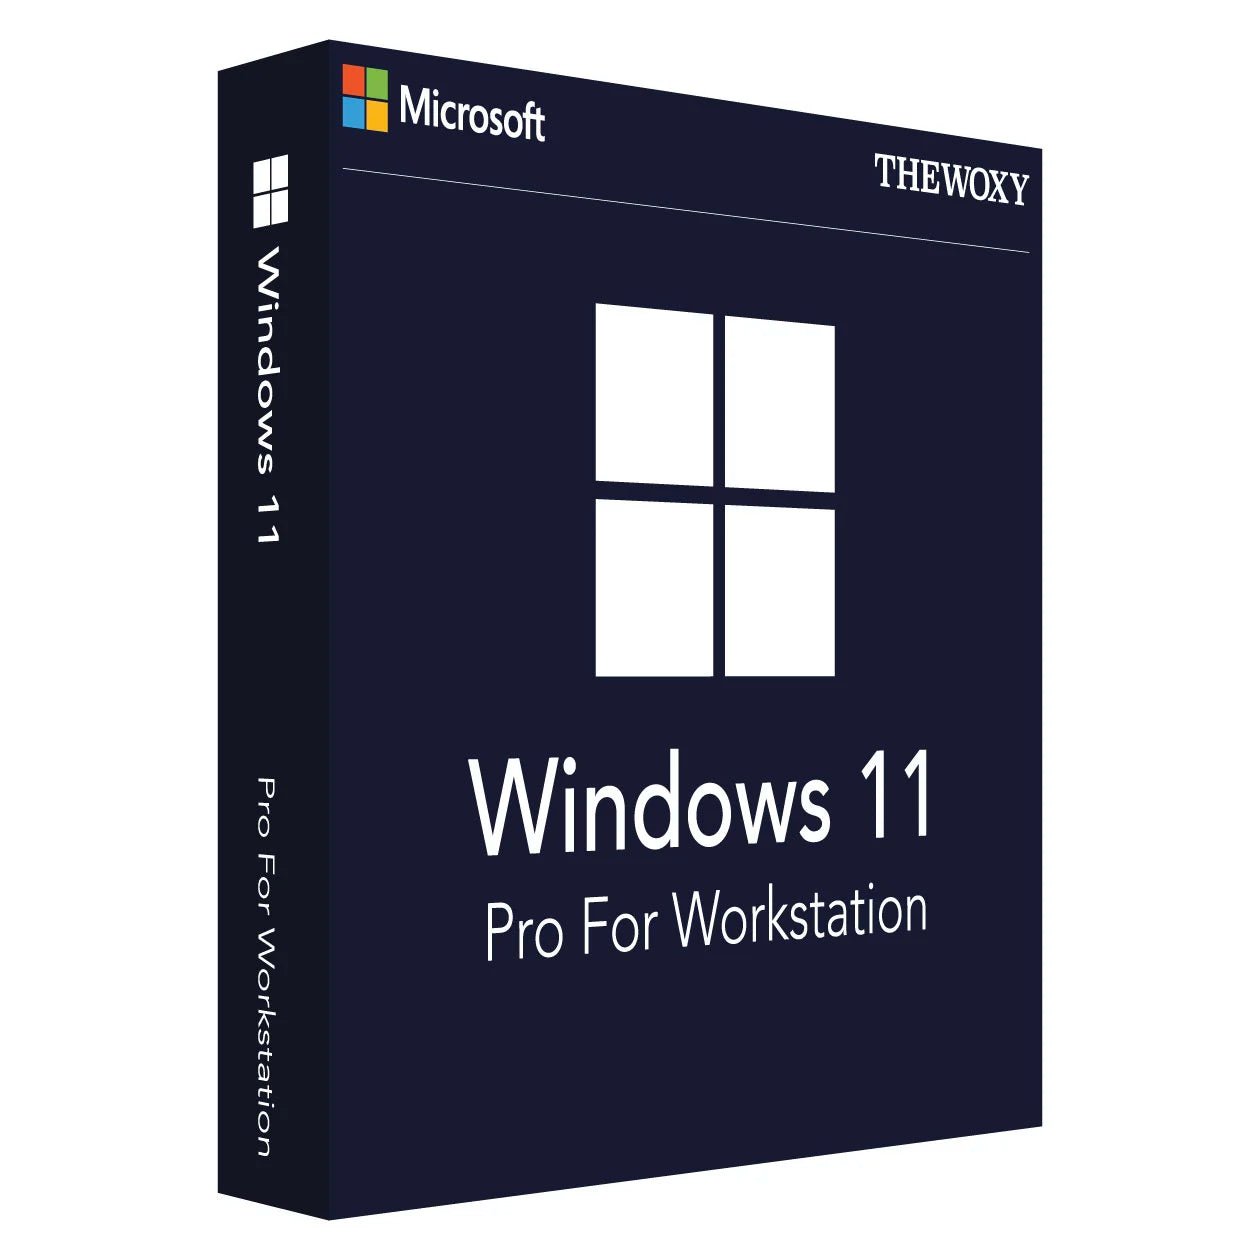 Microsoft Windows 11 Pro For Workstation - Lifetime License Key for 1 PC